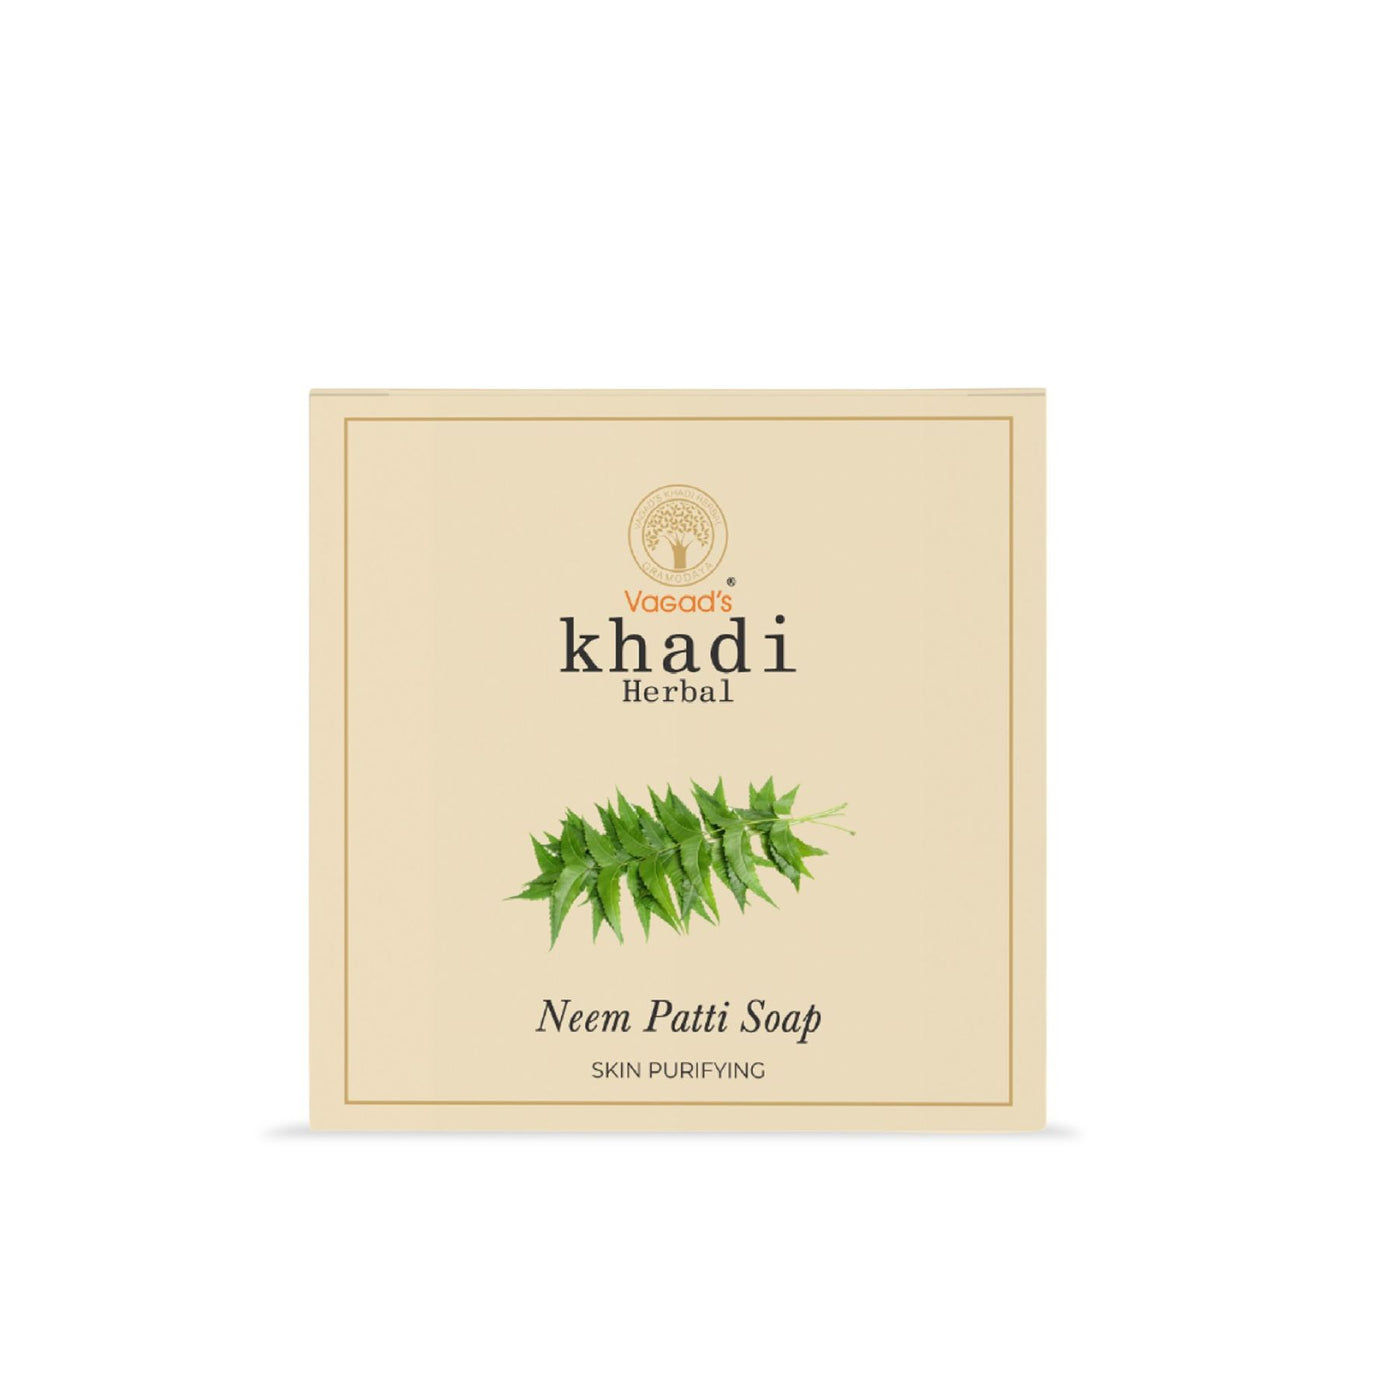 Vagad's Khadi Neem Patti Soap (Pack of 3)